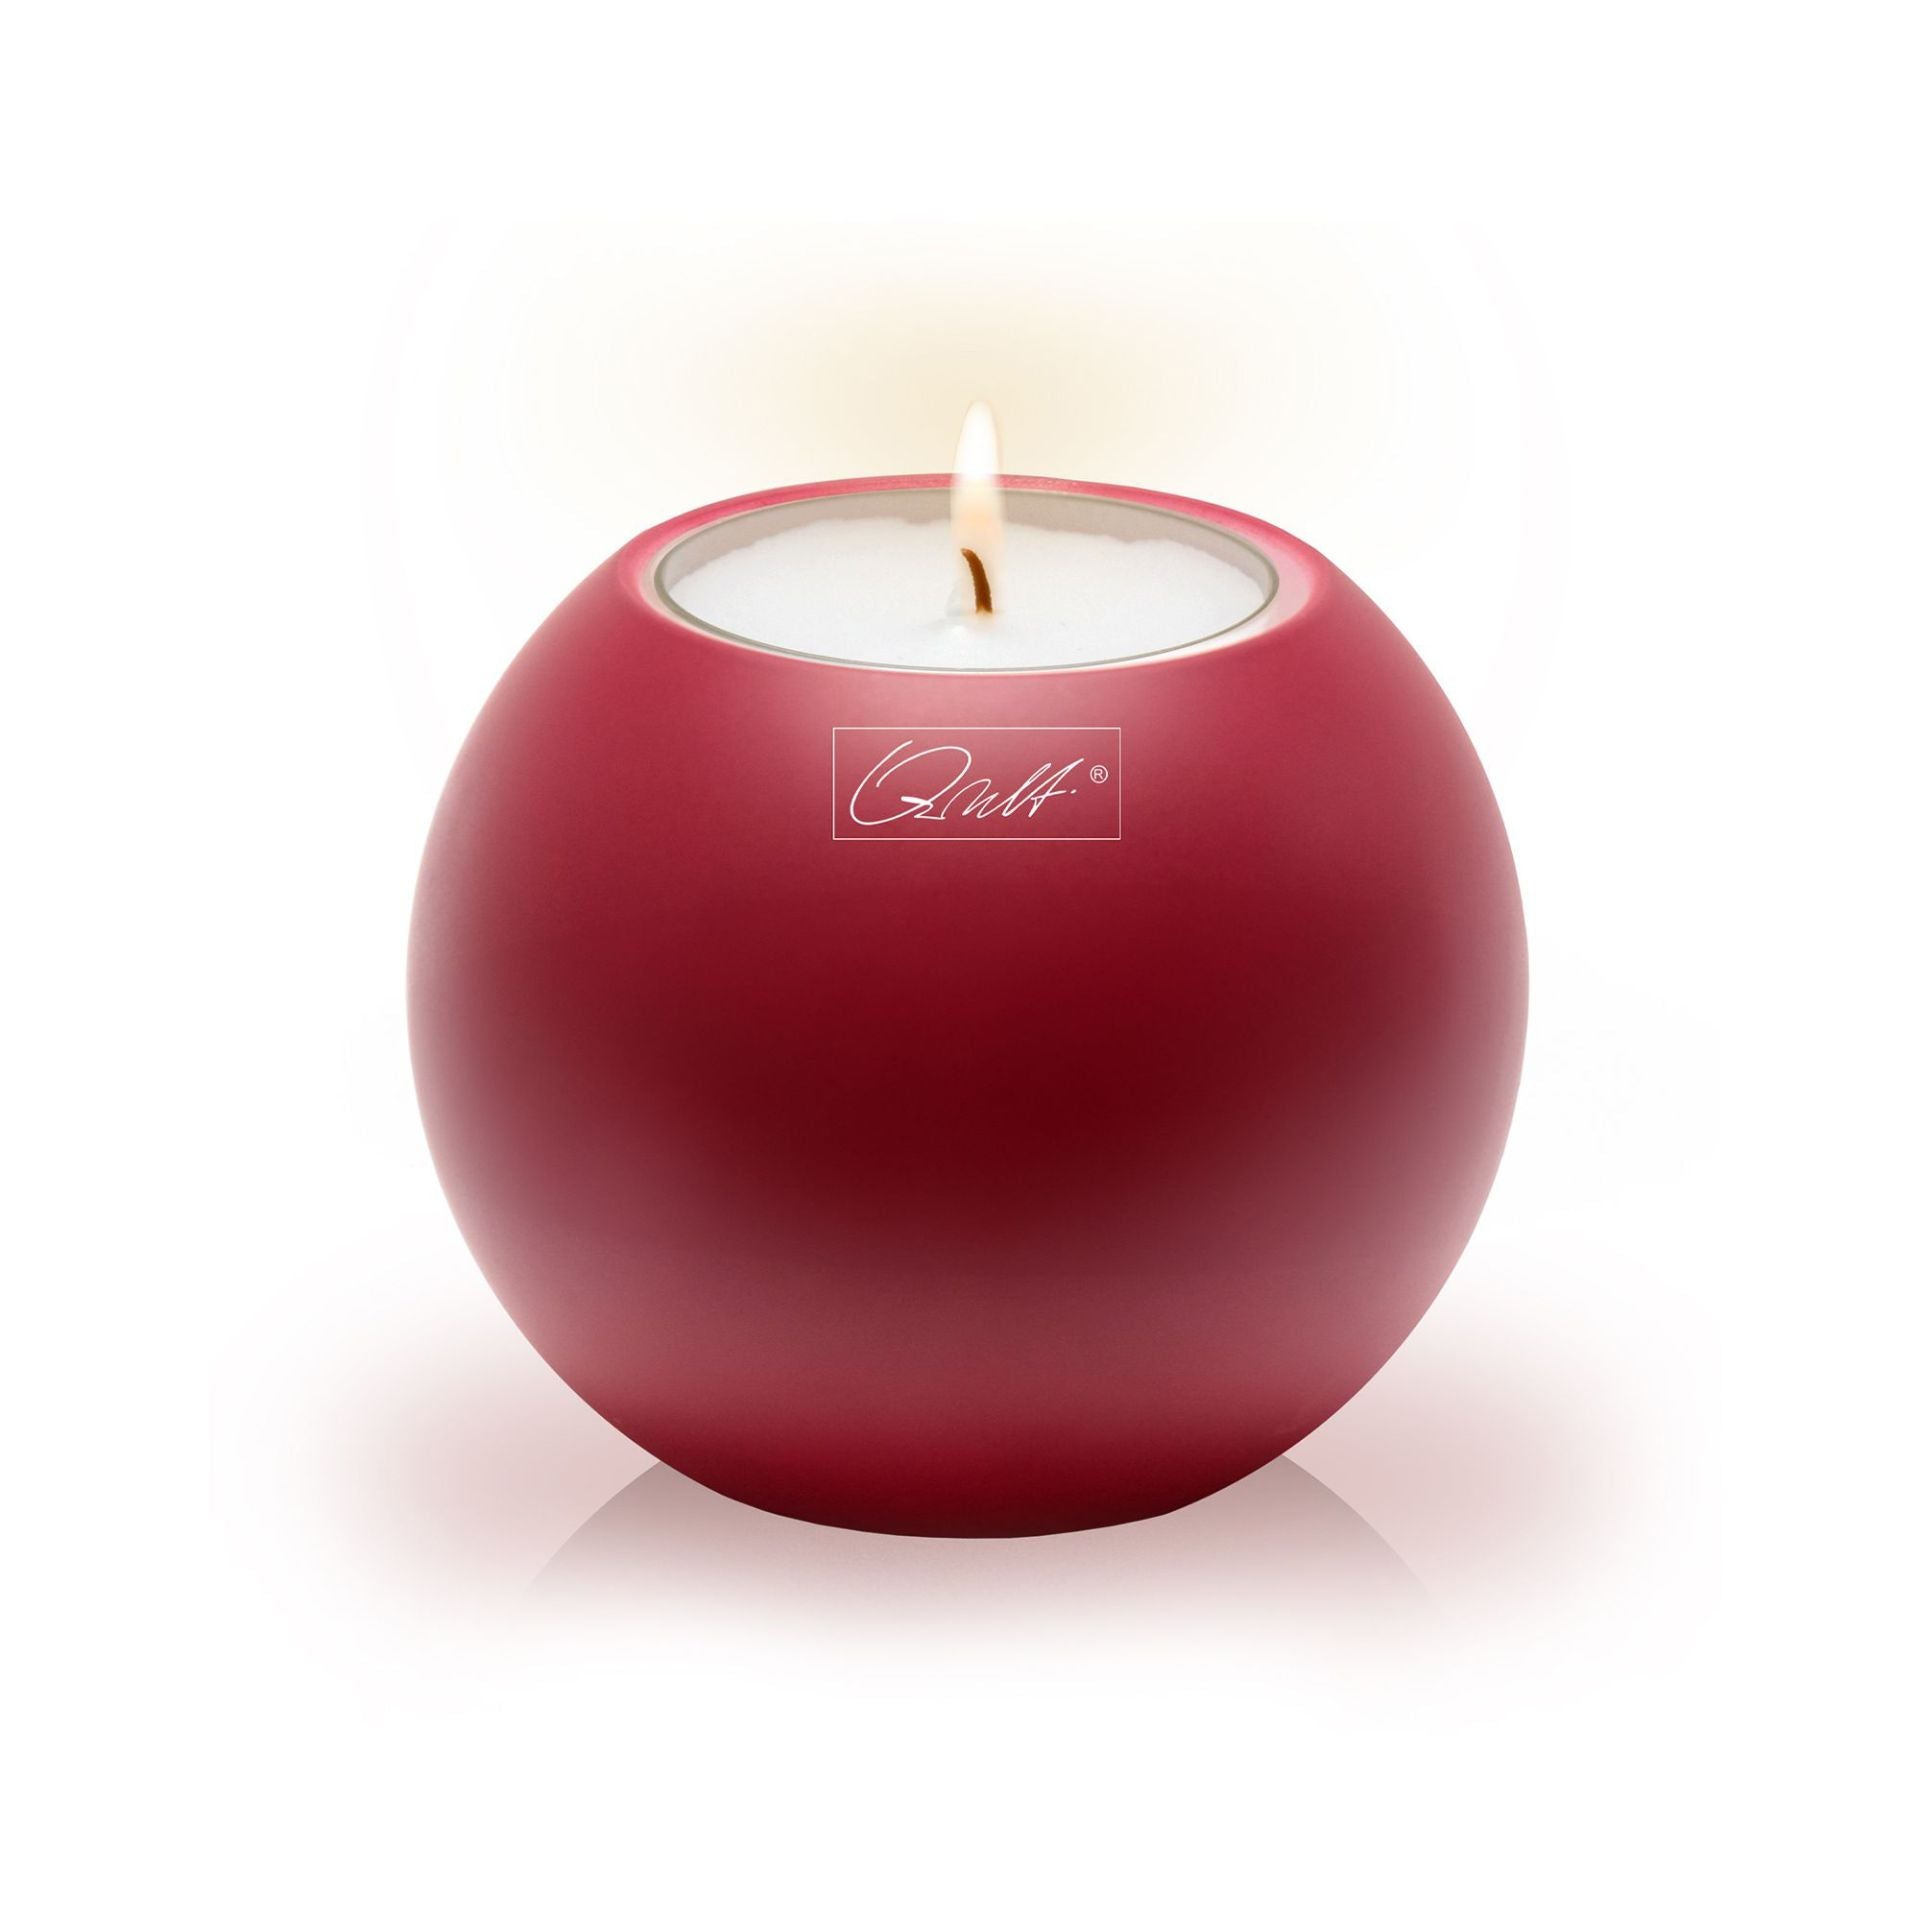 Kaufen merlot-red Qult Moon Teelichthalter in Kerzenform